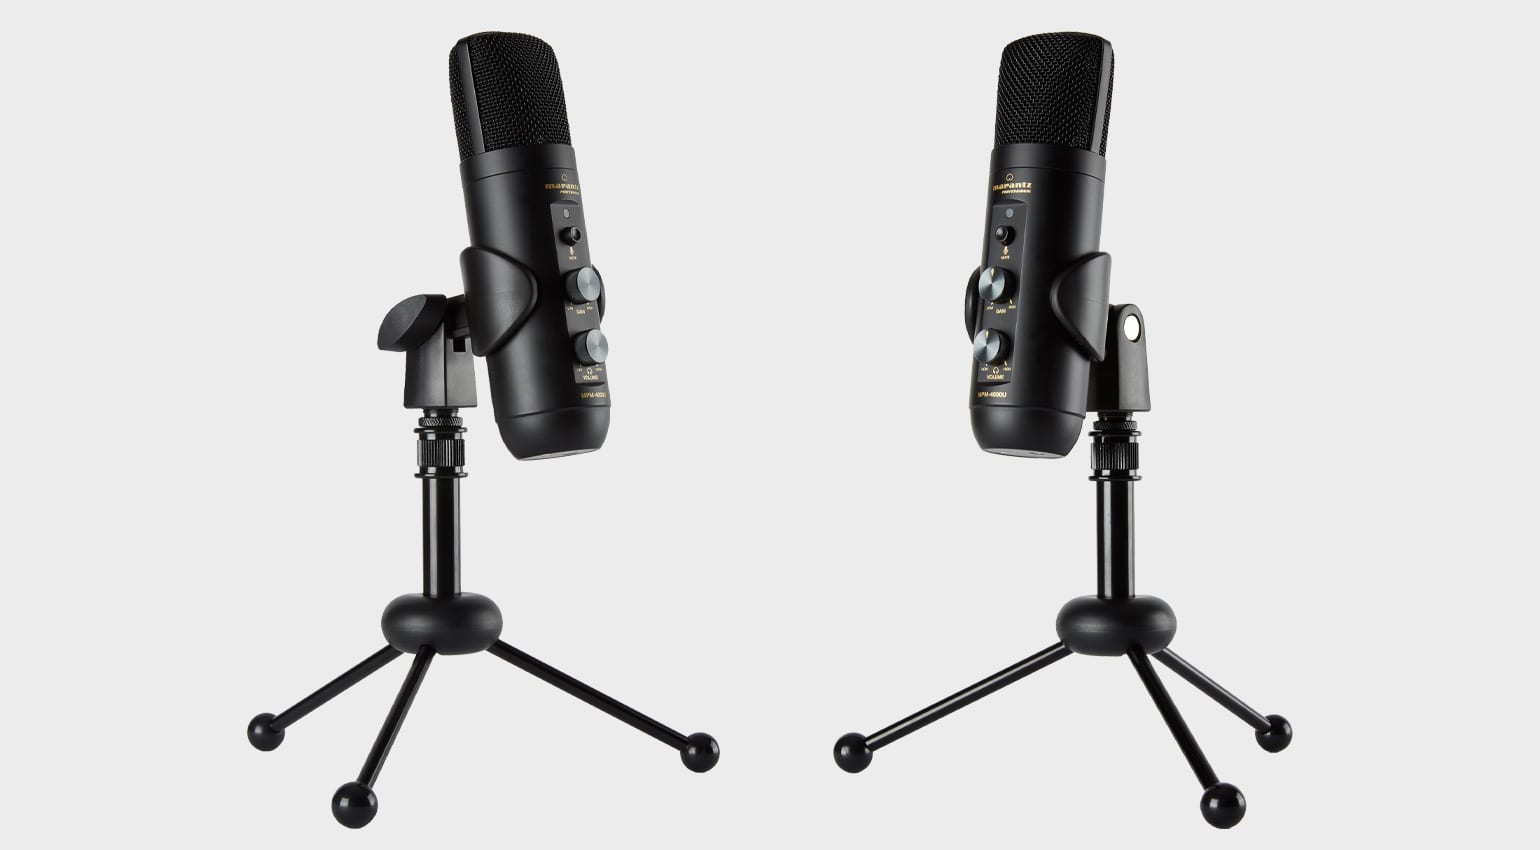 Marantz launches the MPM-4000U USB Podcast Microphone - gearnews.com